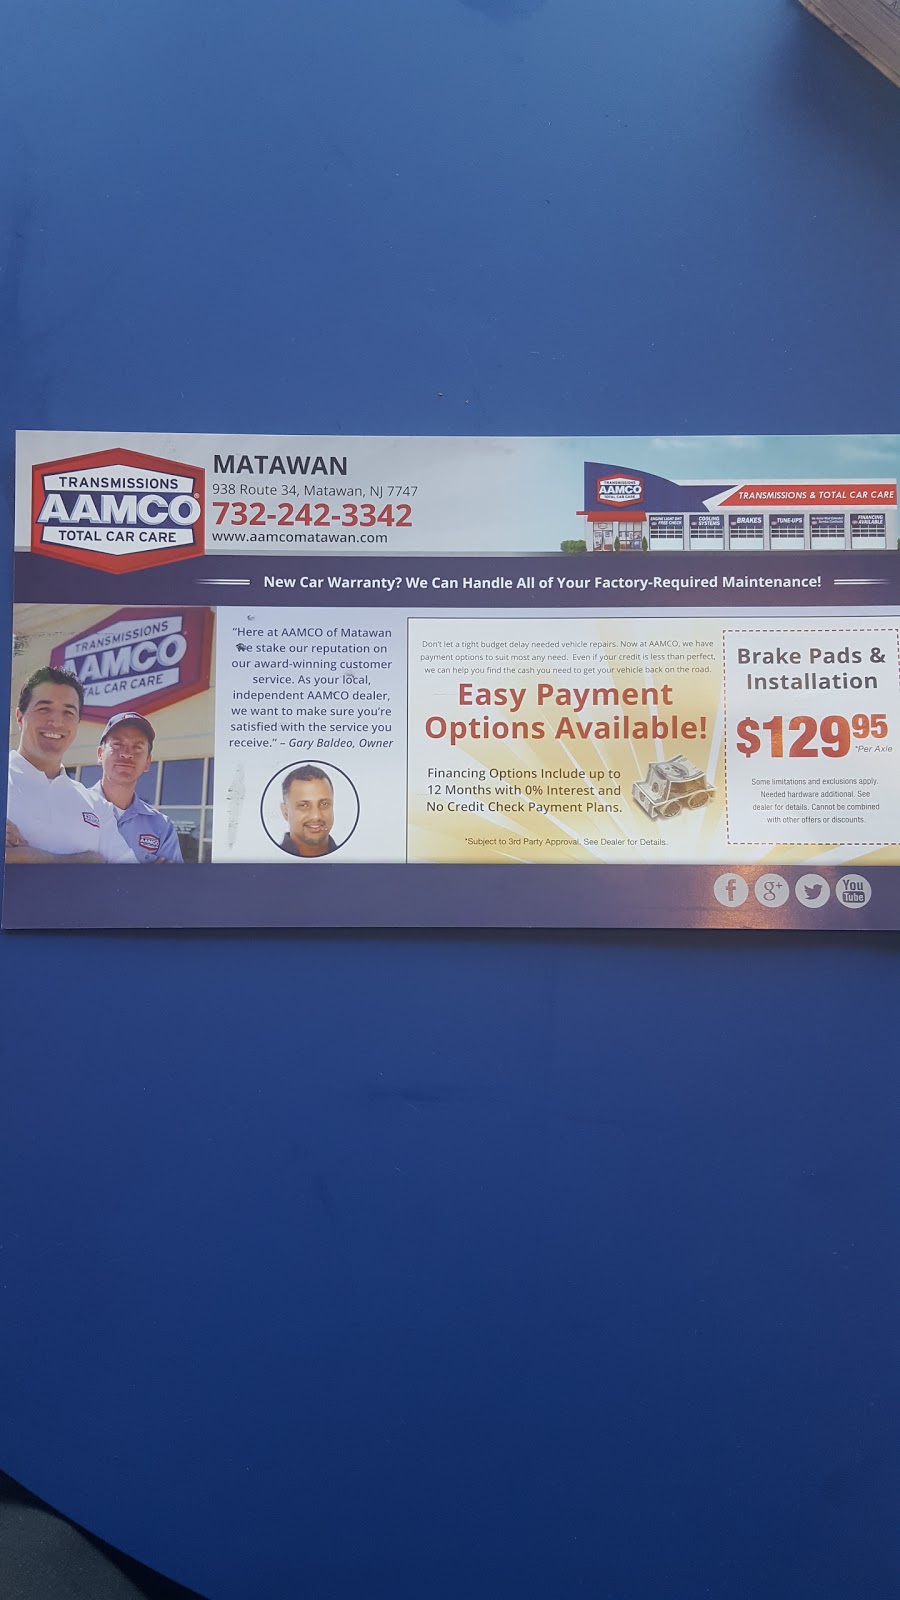 AAMCO Transmissions & Total Car Care | 310 NJ-36, Hazlet, NJ 07730 | Phone: (732) 387-6290